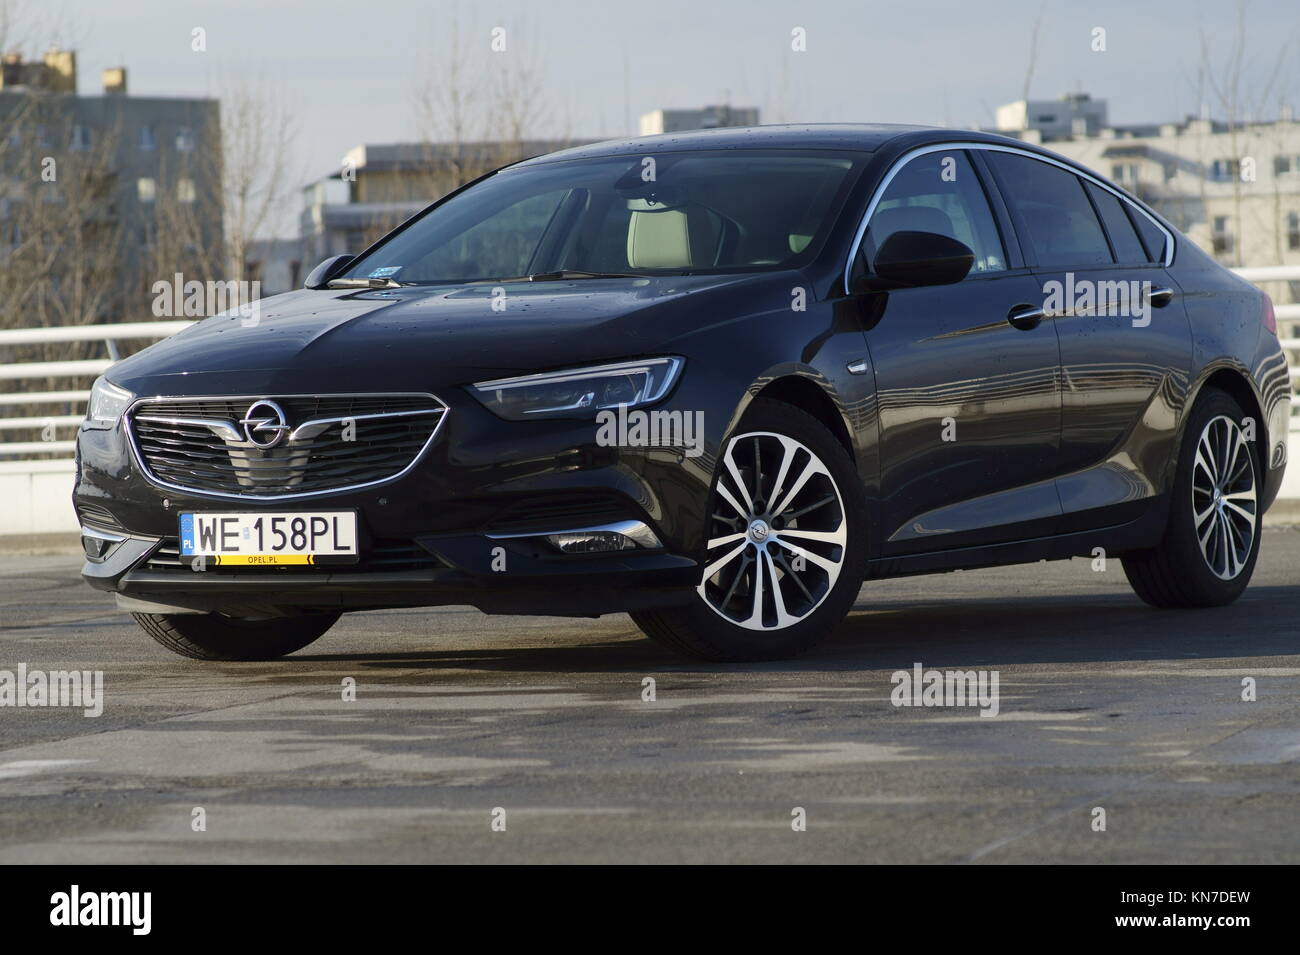 2017 Opel Insignia GrandSport 2.0 CDTI Stock Photo - Alamy